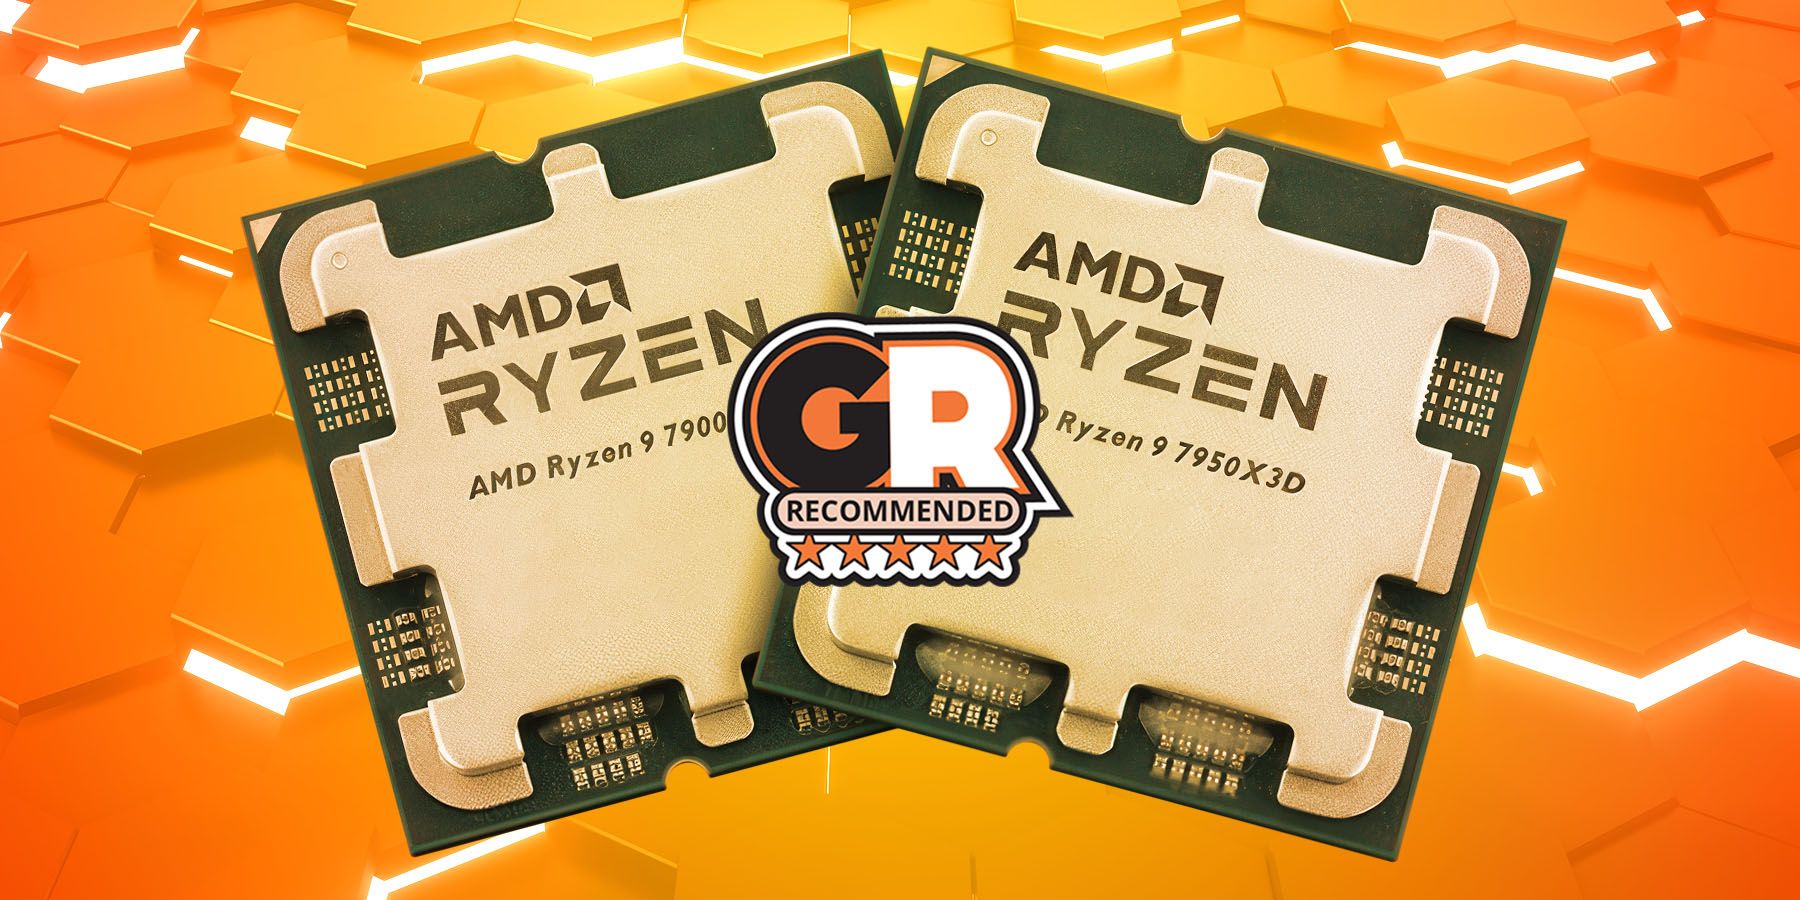 AMD Ryzen 9 7950X3D vs 7900X3D : What To Buy Thumb